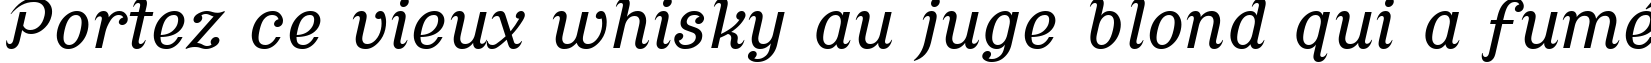 Пример написания шрифтом Cursive Serif текста на французском